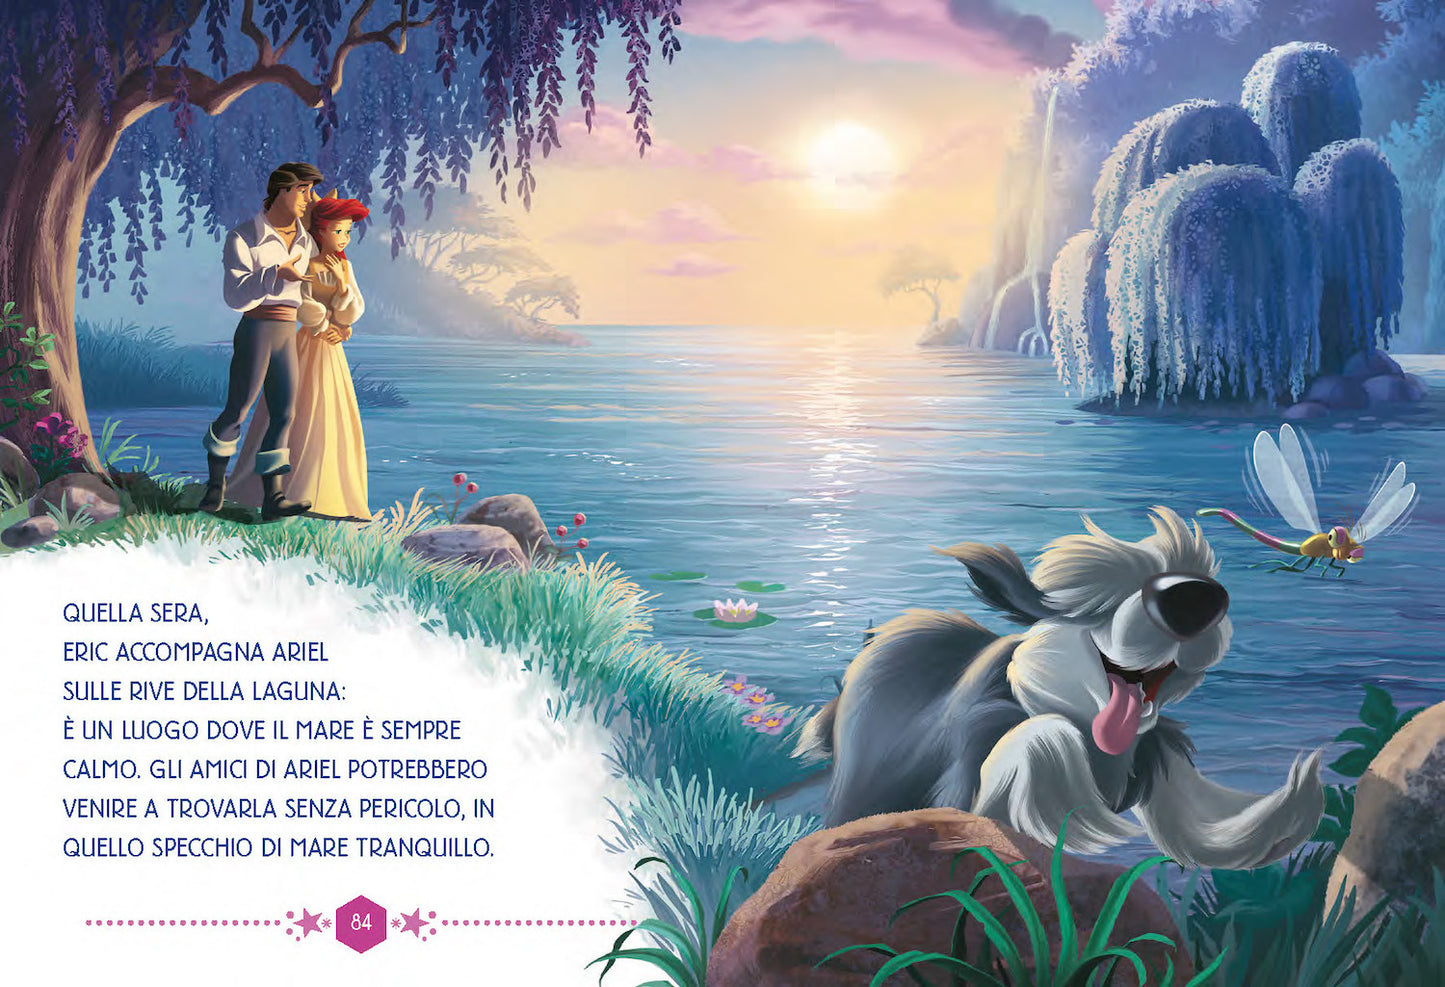 Disney Princess Super Collection Disney100::Storie senza tempo